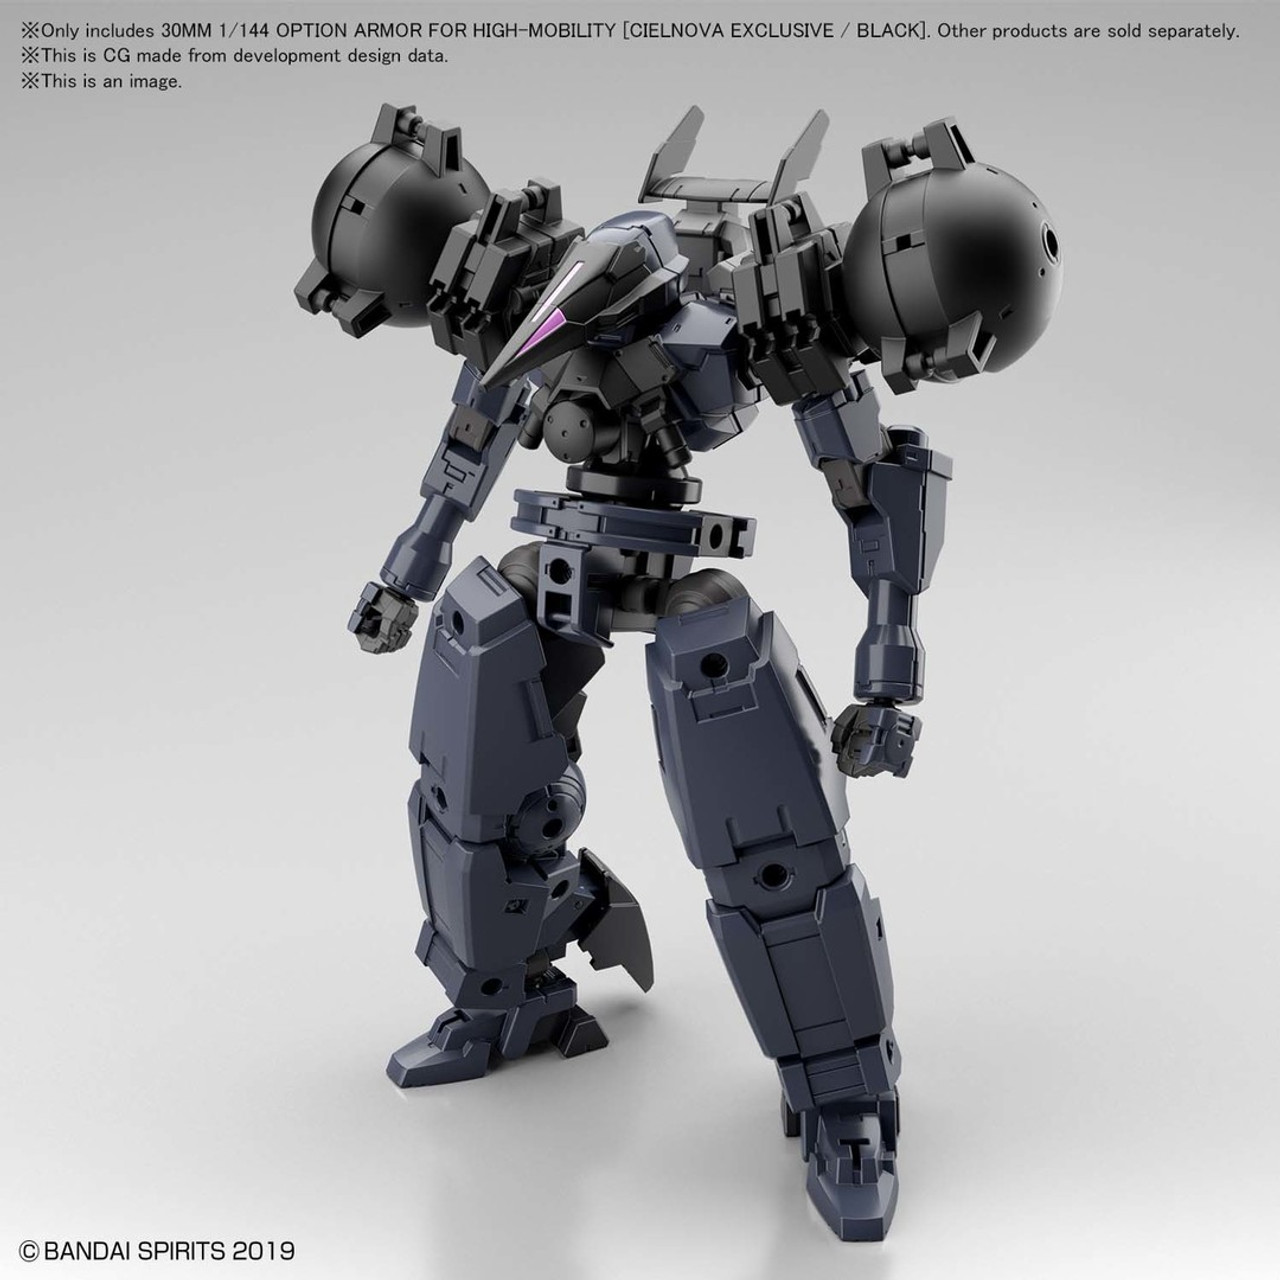 BAN2530641  #28 Cielnova Option Armor For High Mobility (Black) "30 Minute Missions", Bandai Spirits 30 MM